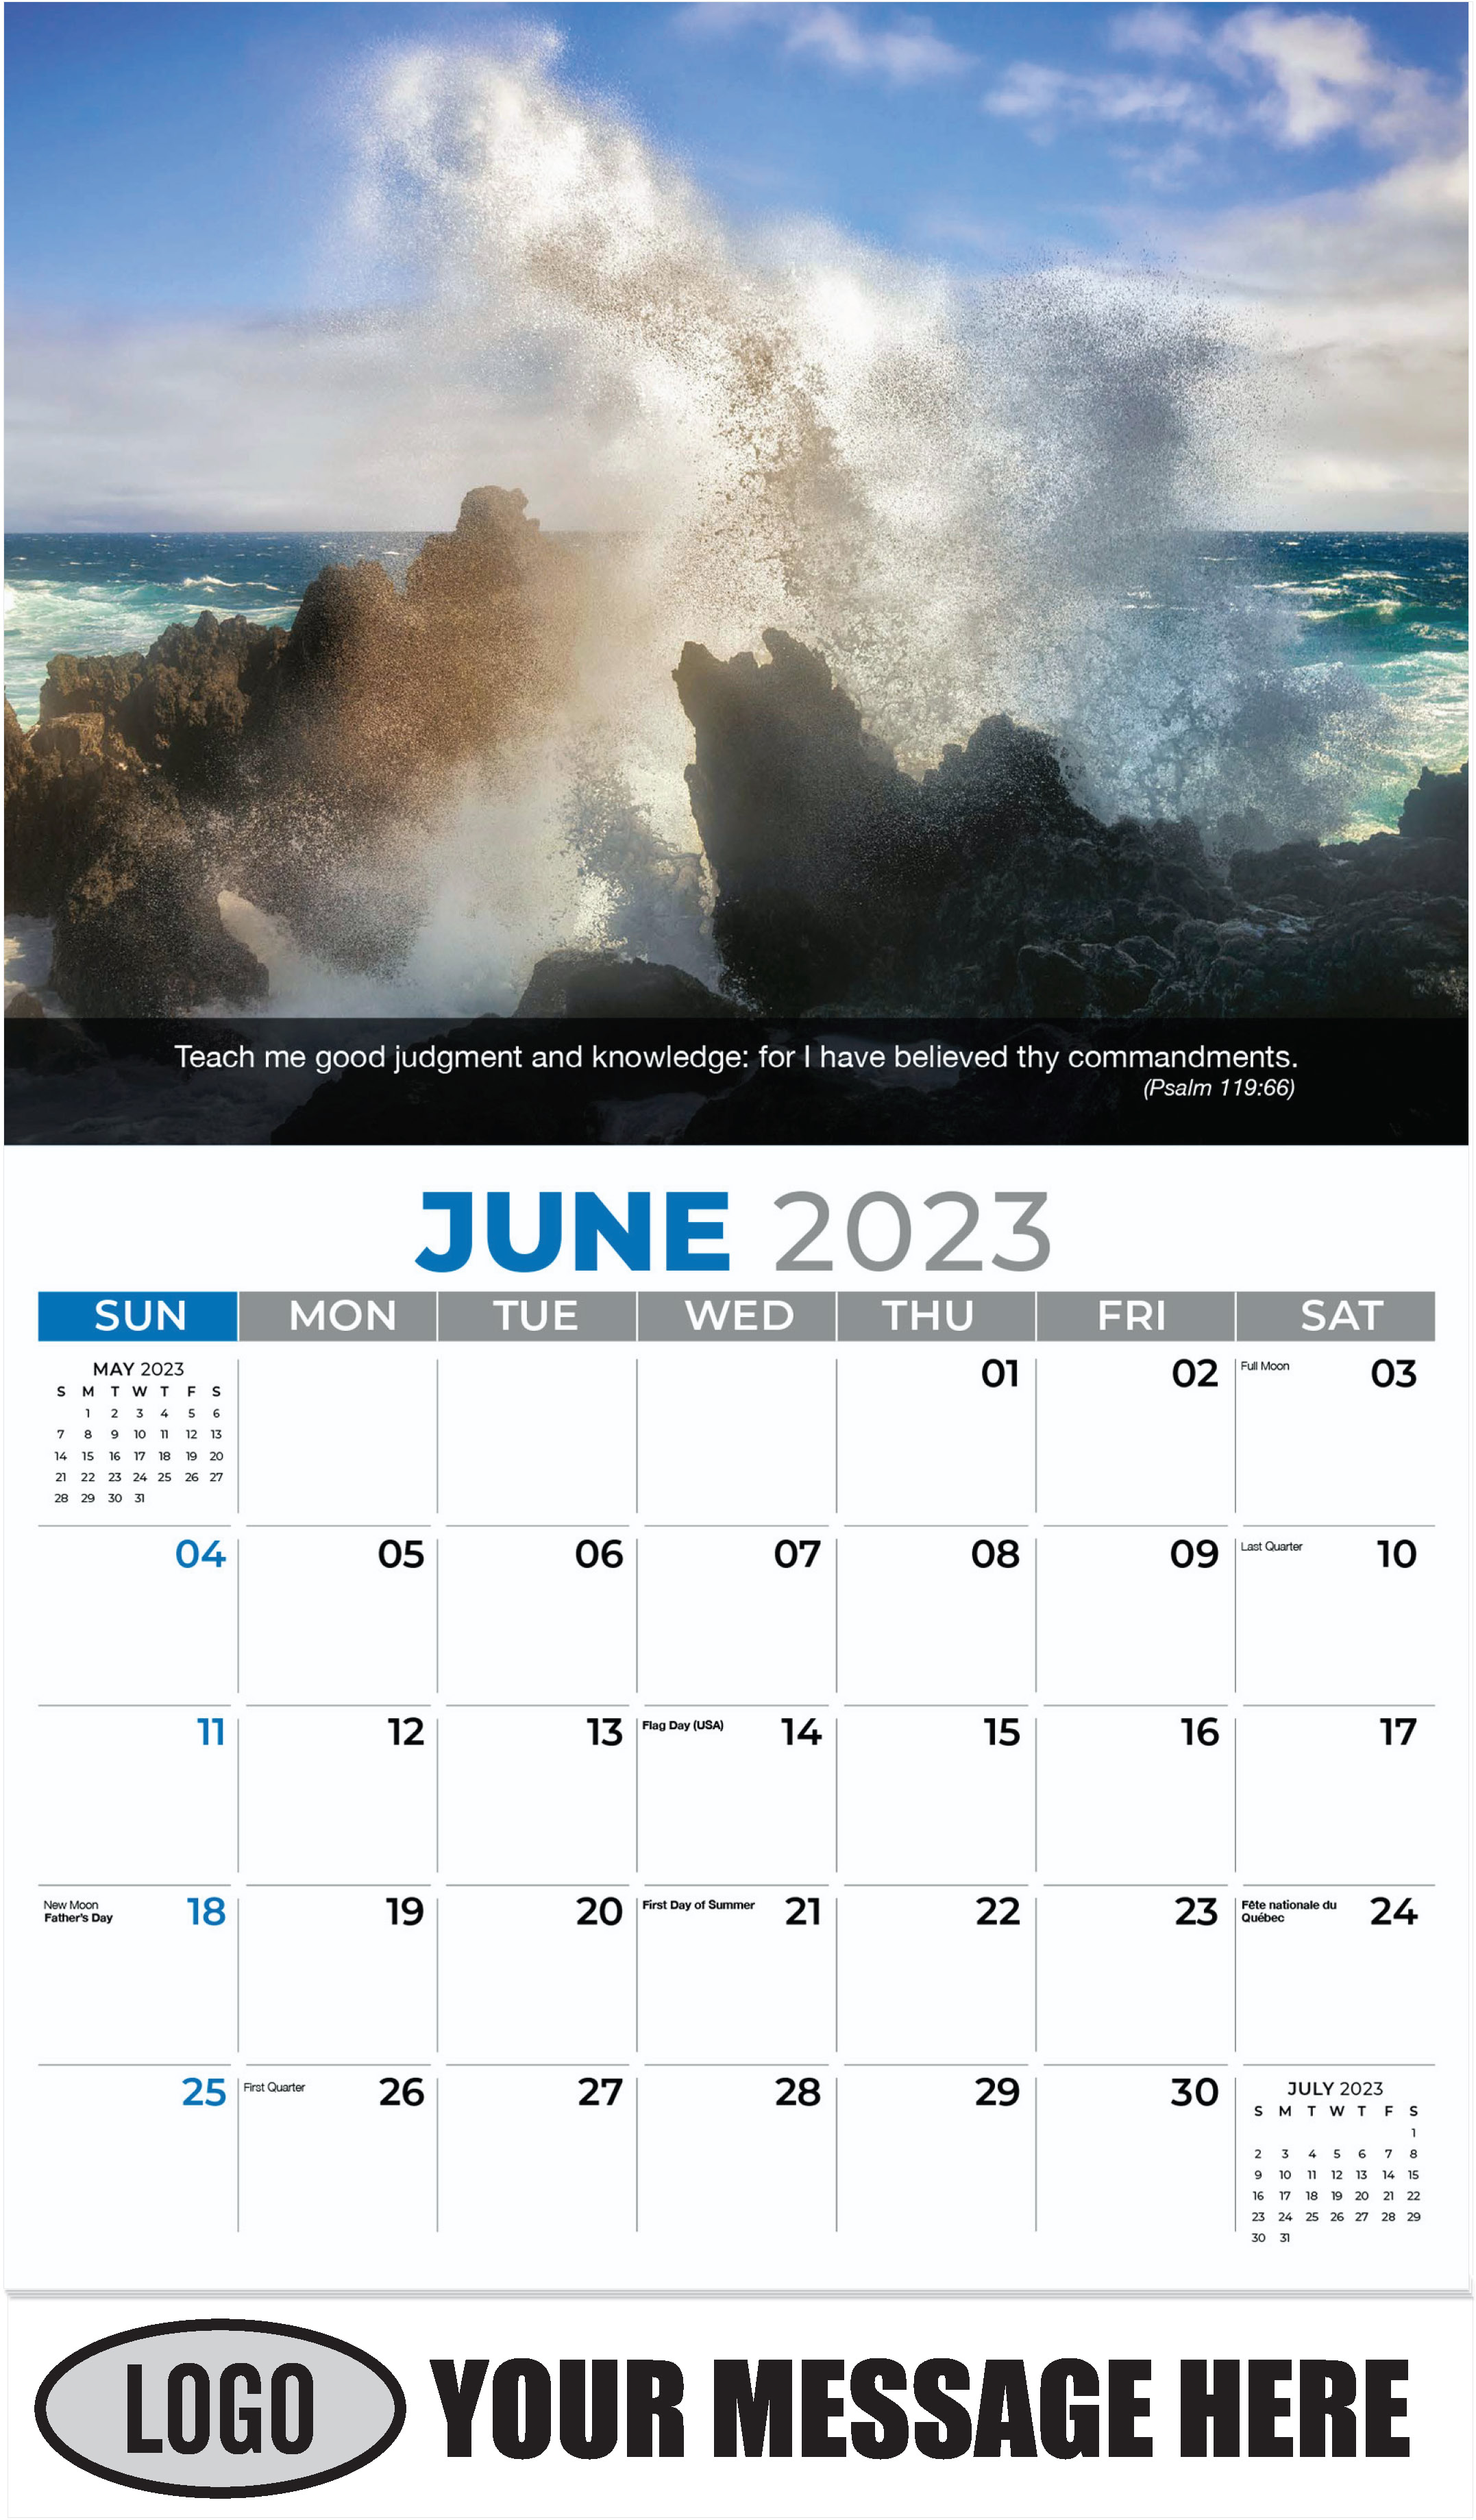 Laupahoeoe Beach, HI - June - Faith Passages 2023 Promotional Calendar